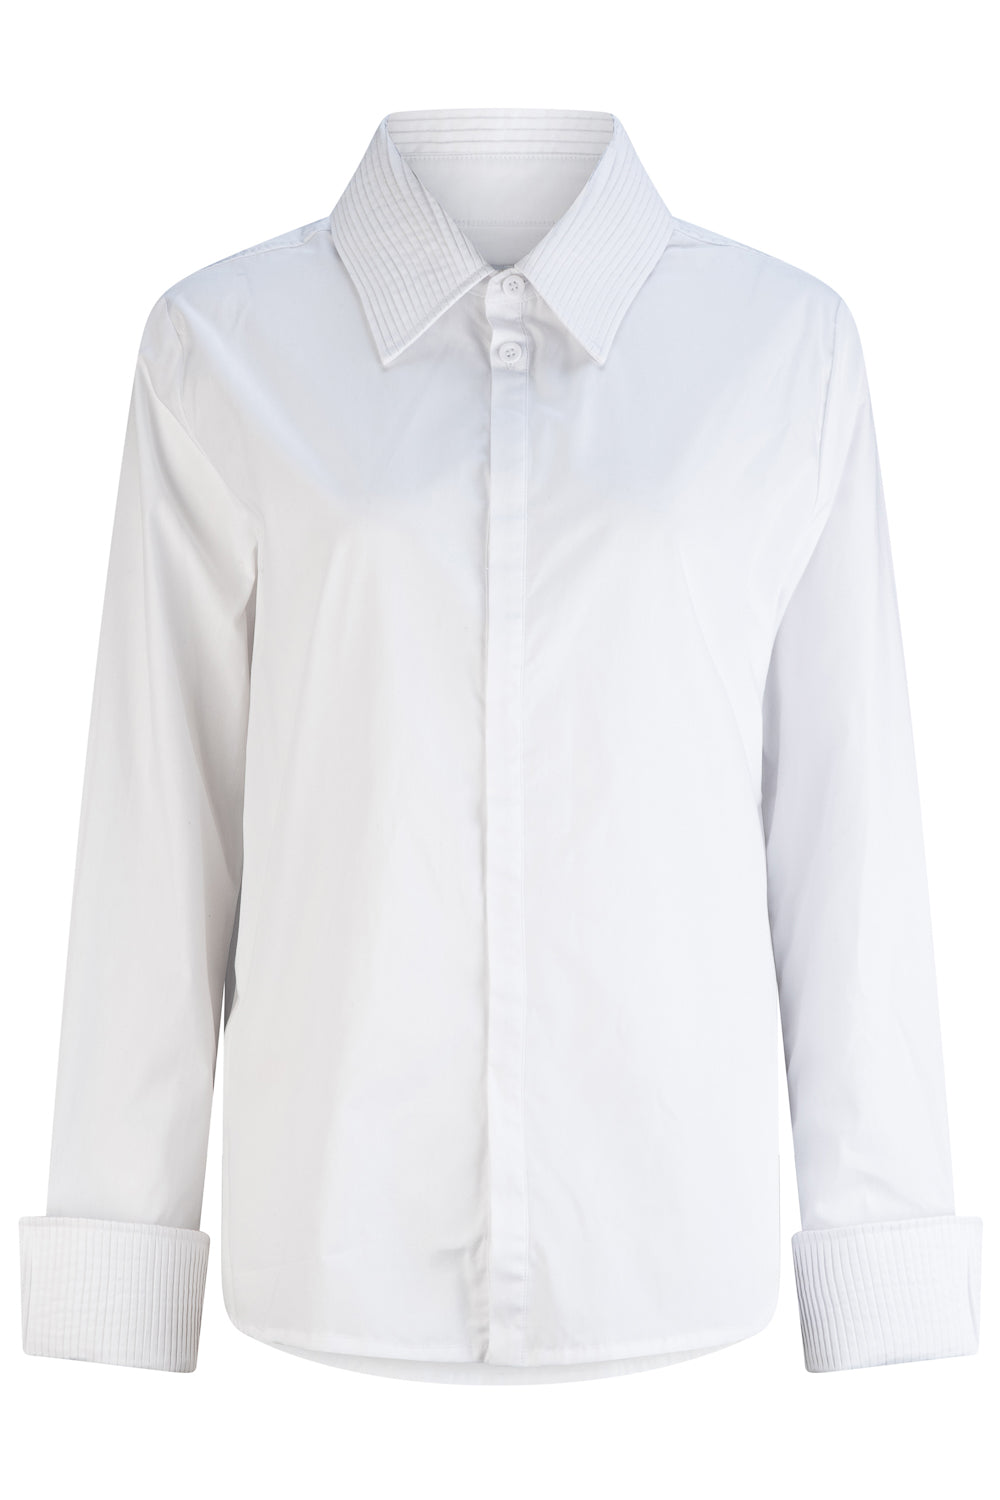 Ontario Shirt - White